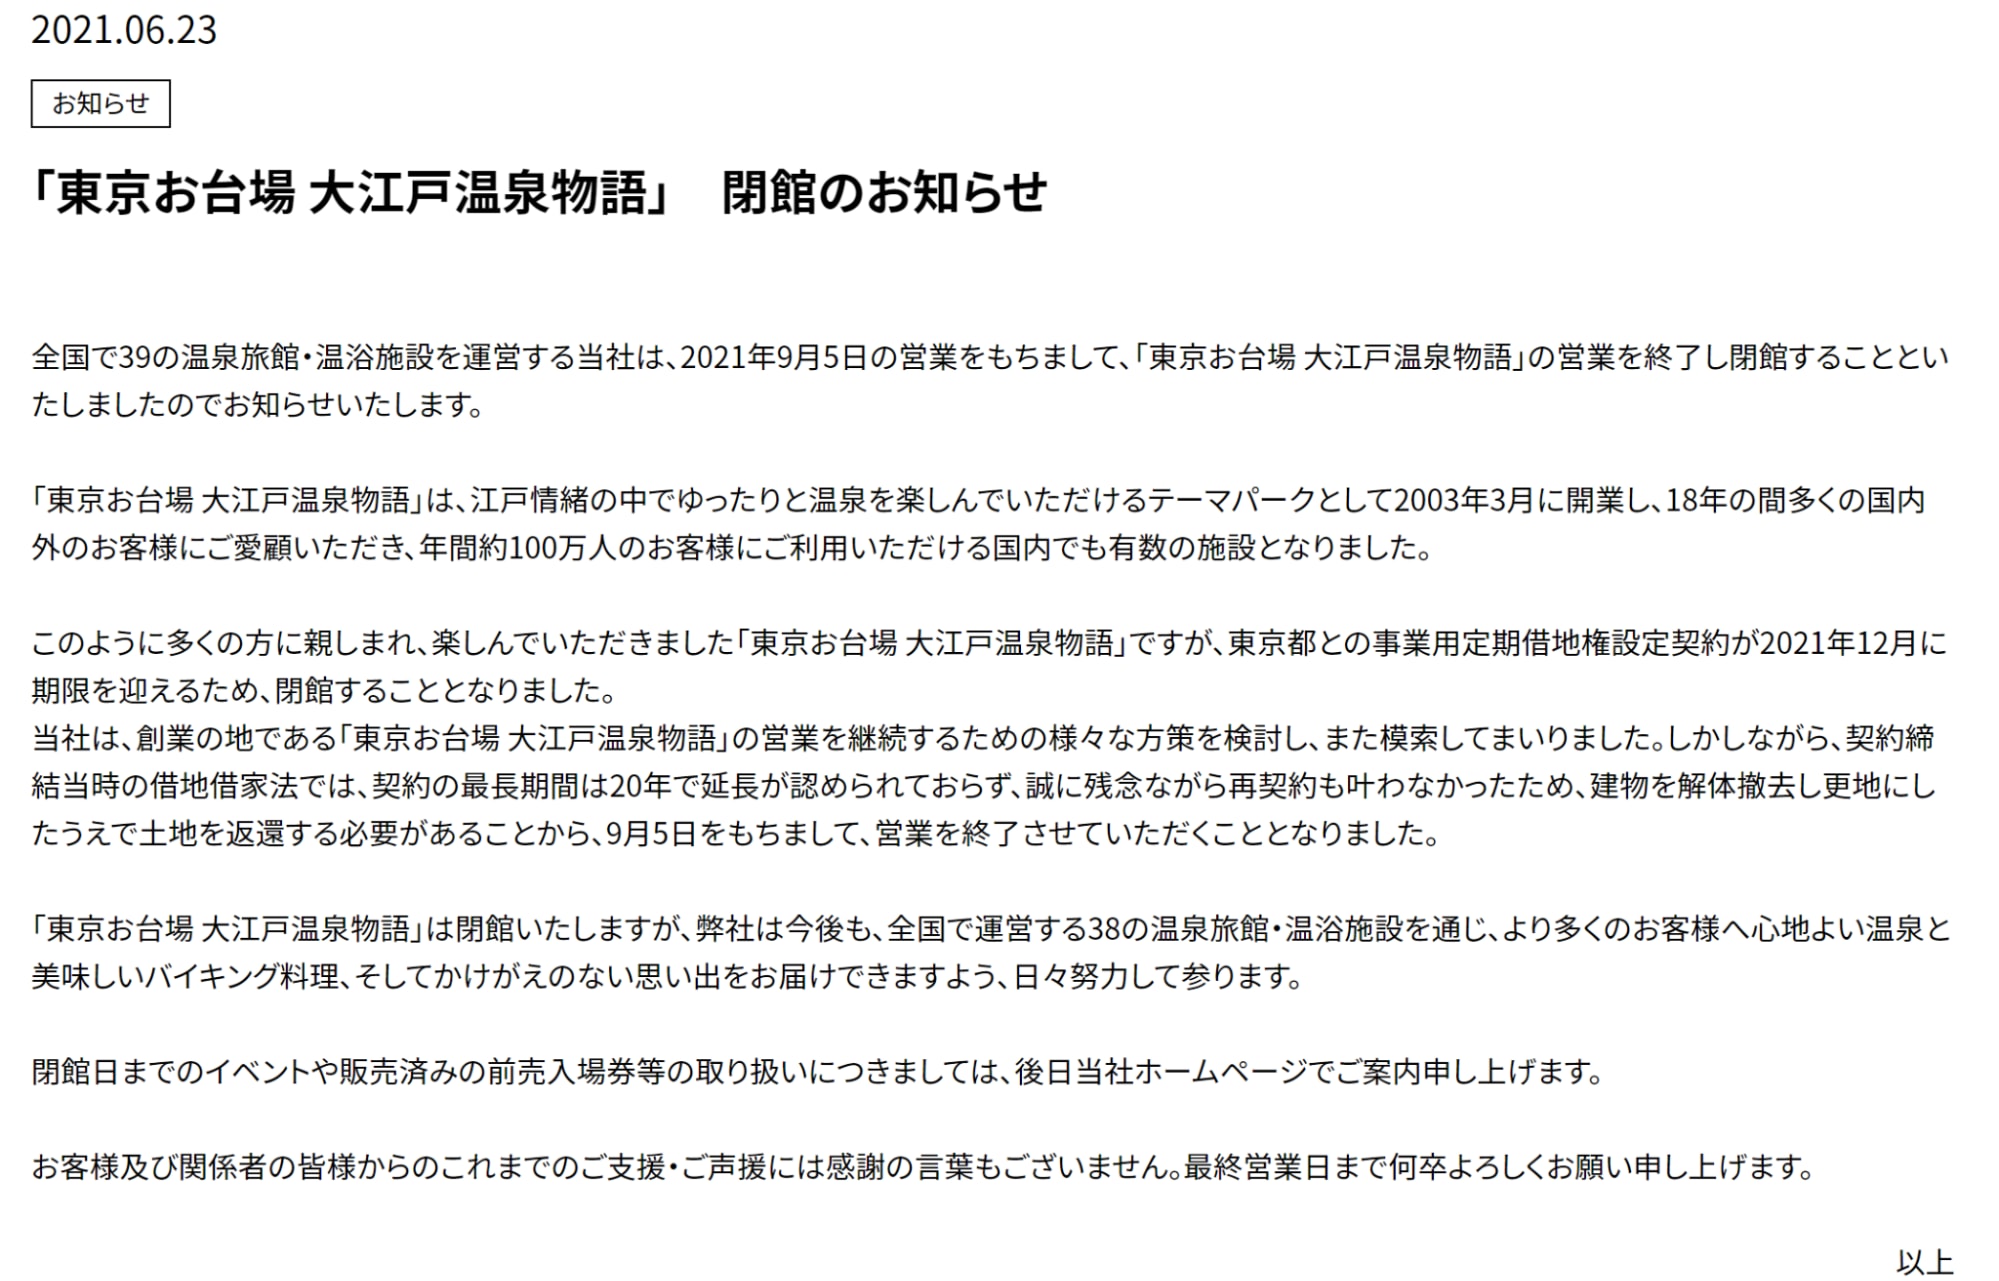 odaiba onsen - closure notice